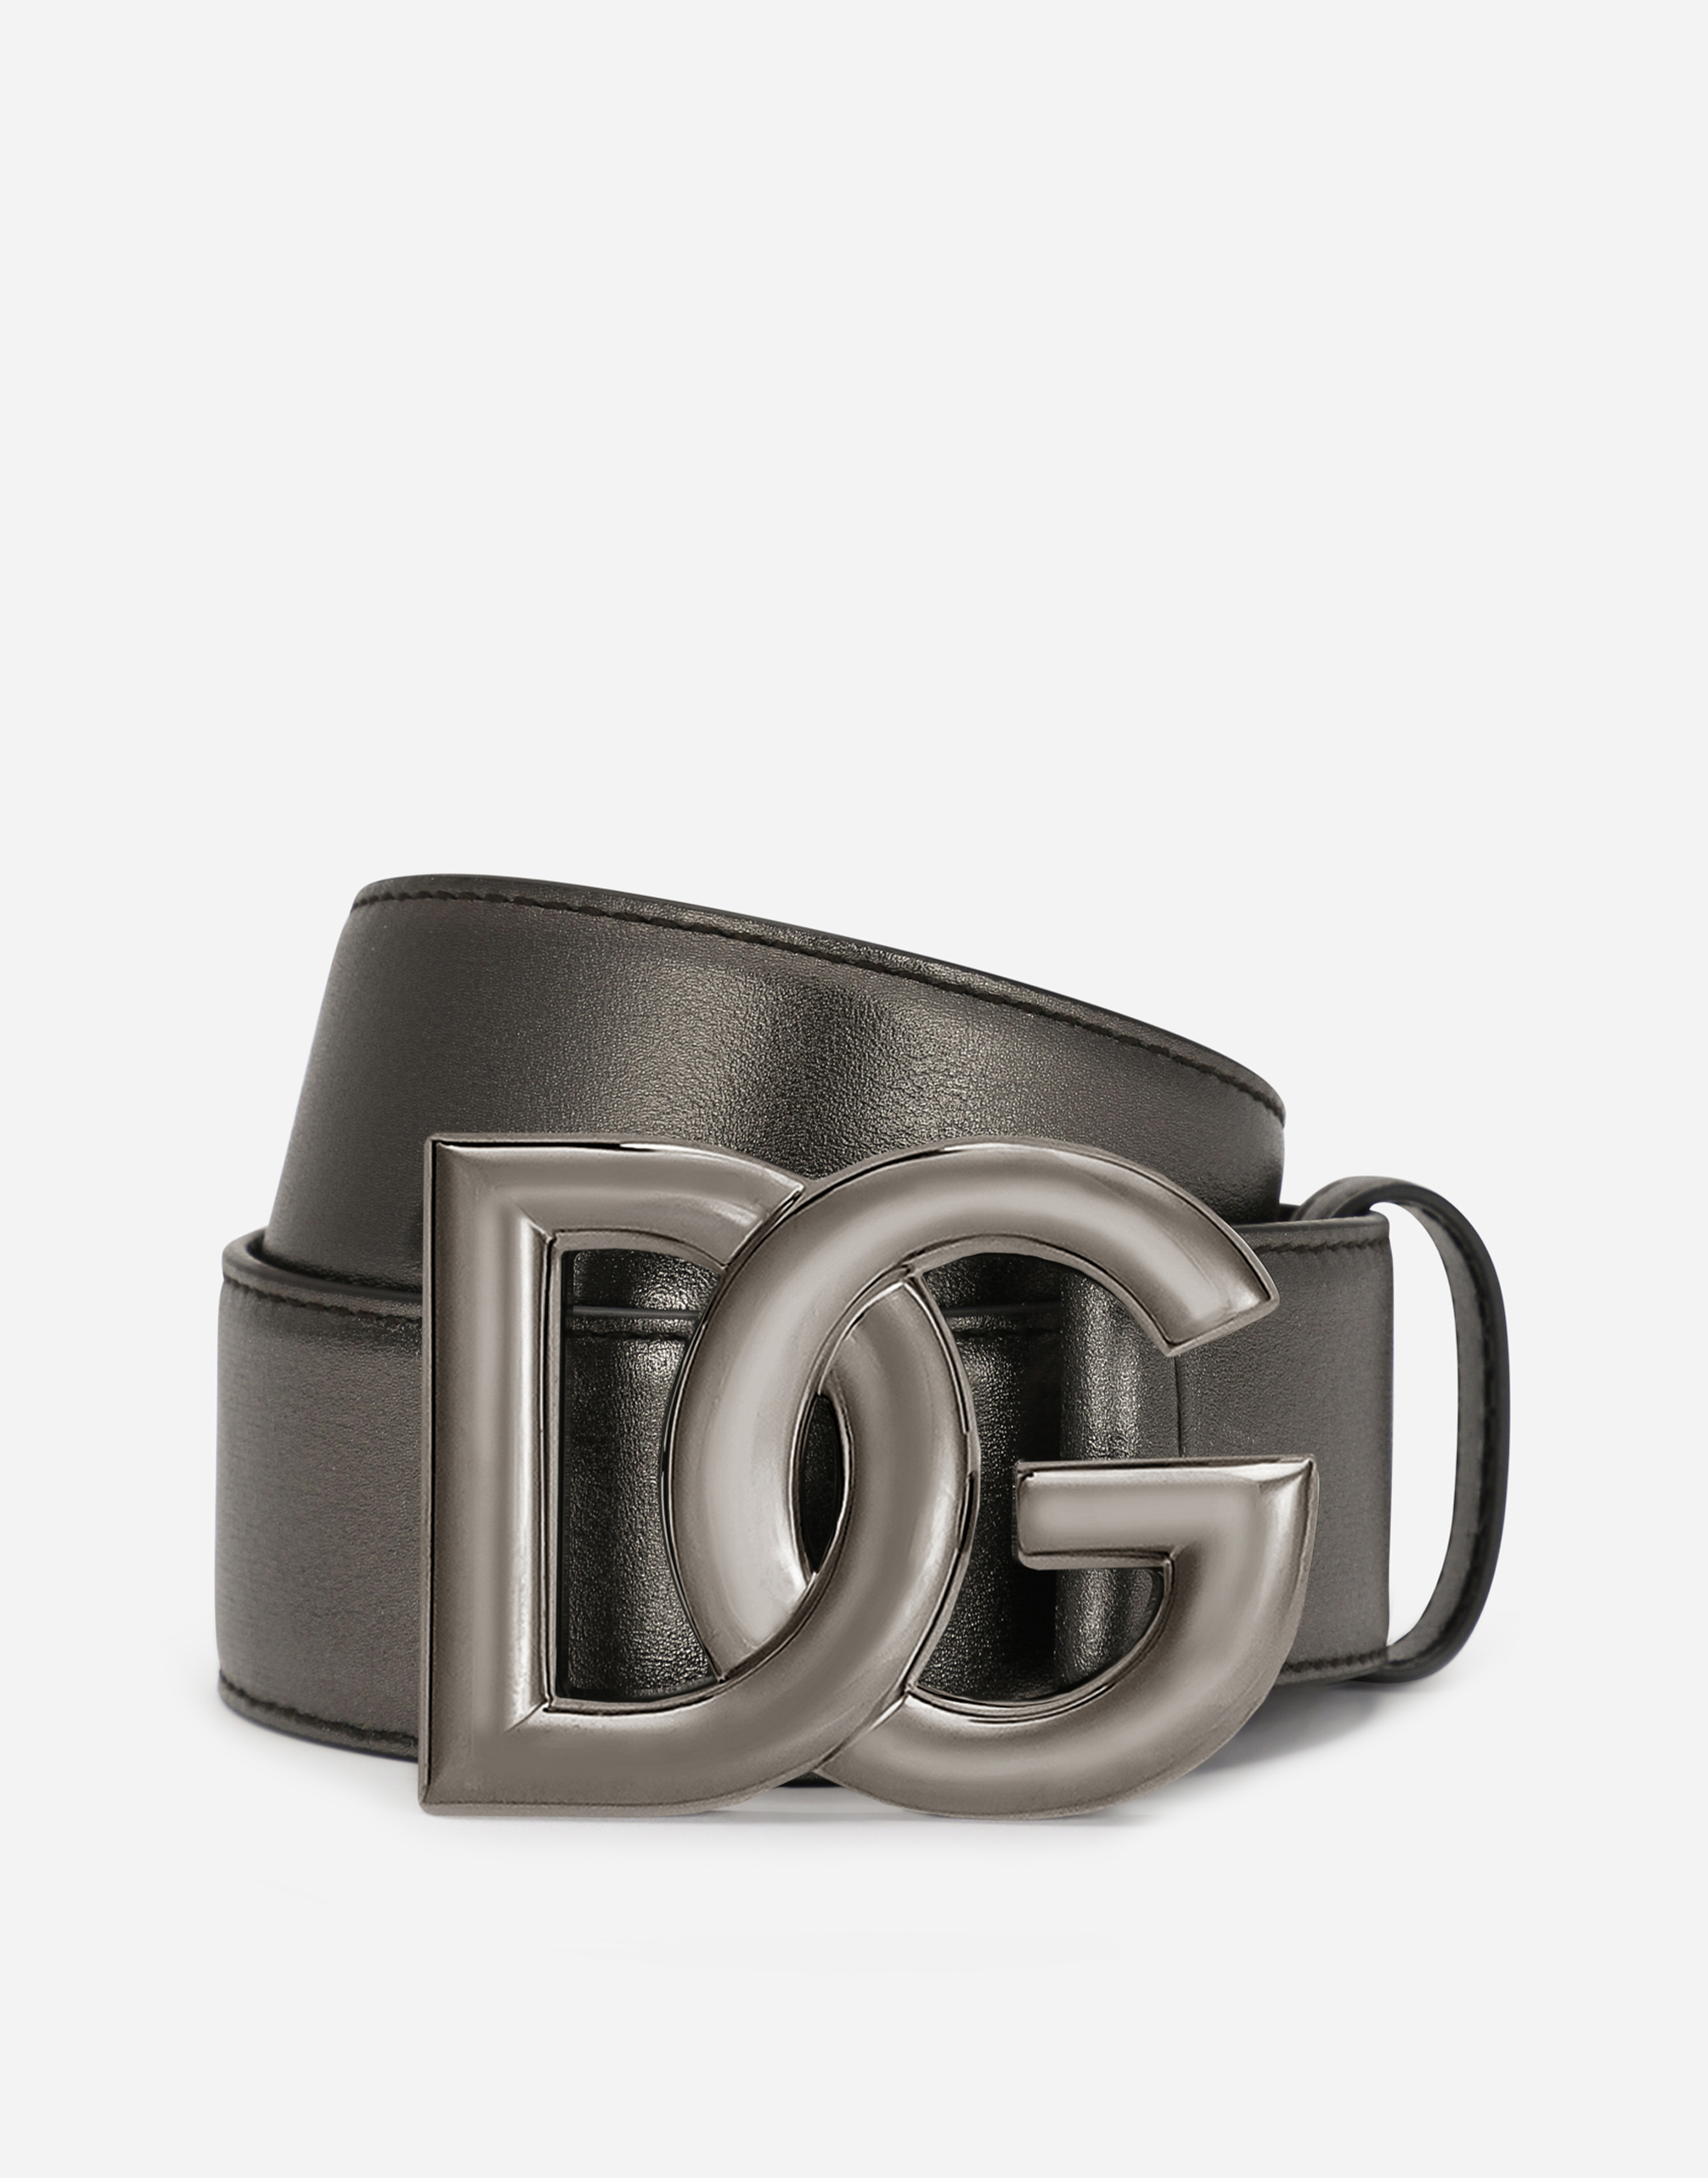 Calfskin belt with crossover DG buckle logo in Multicolor